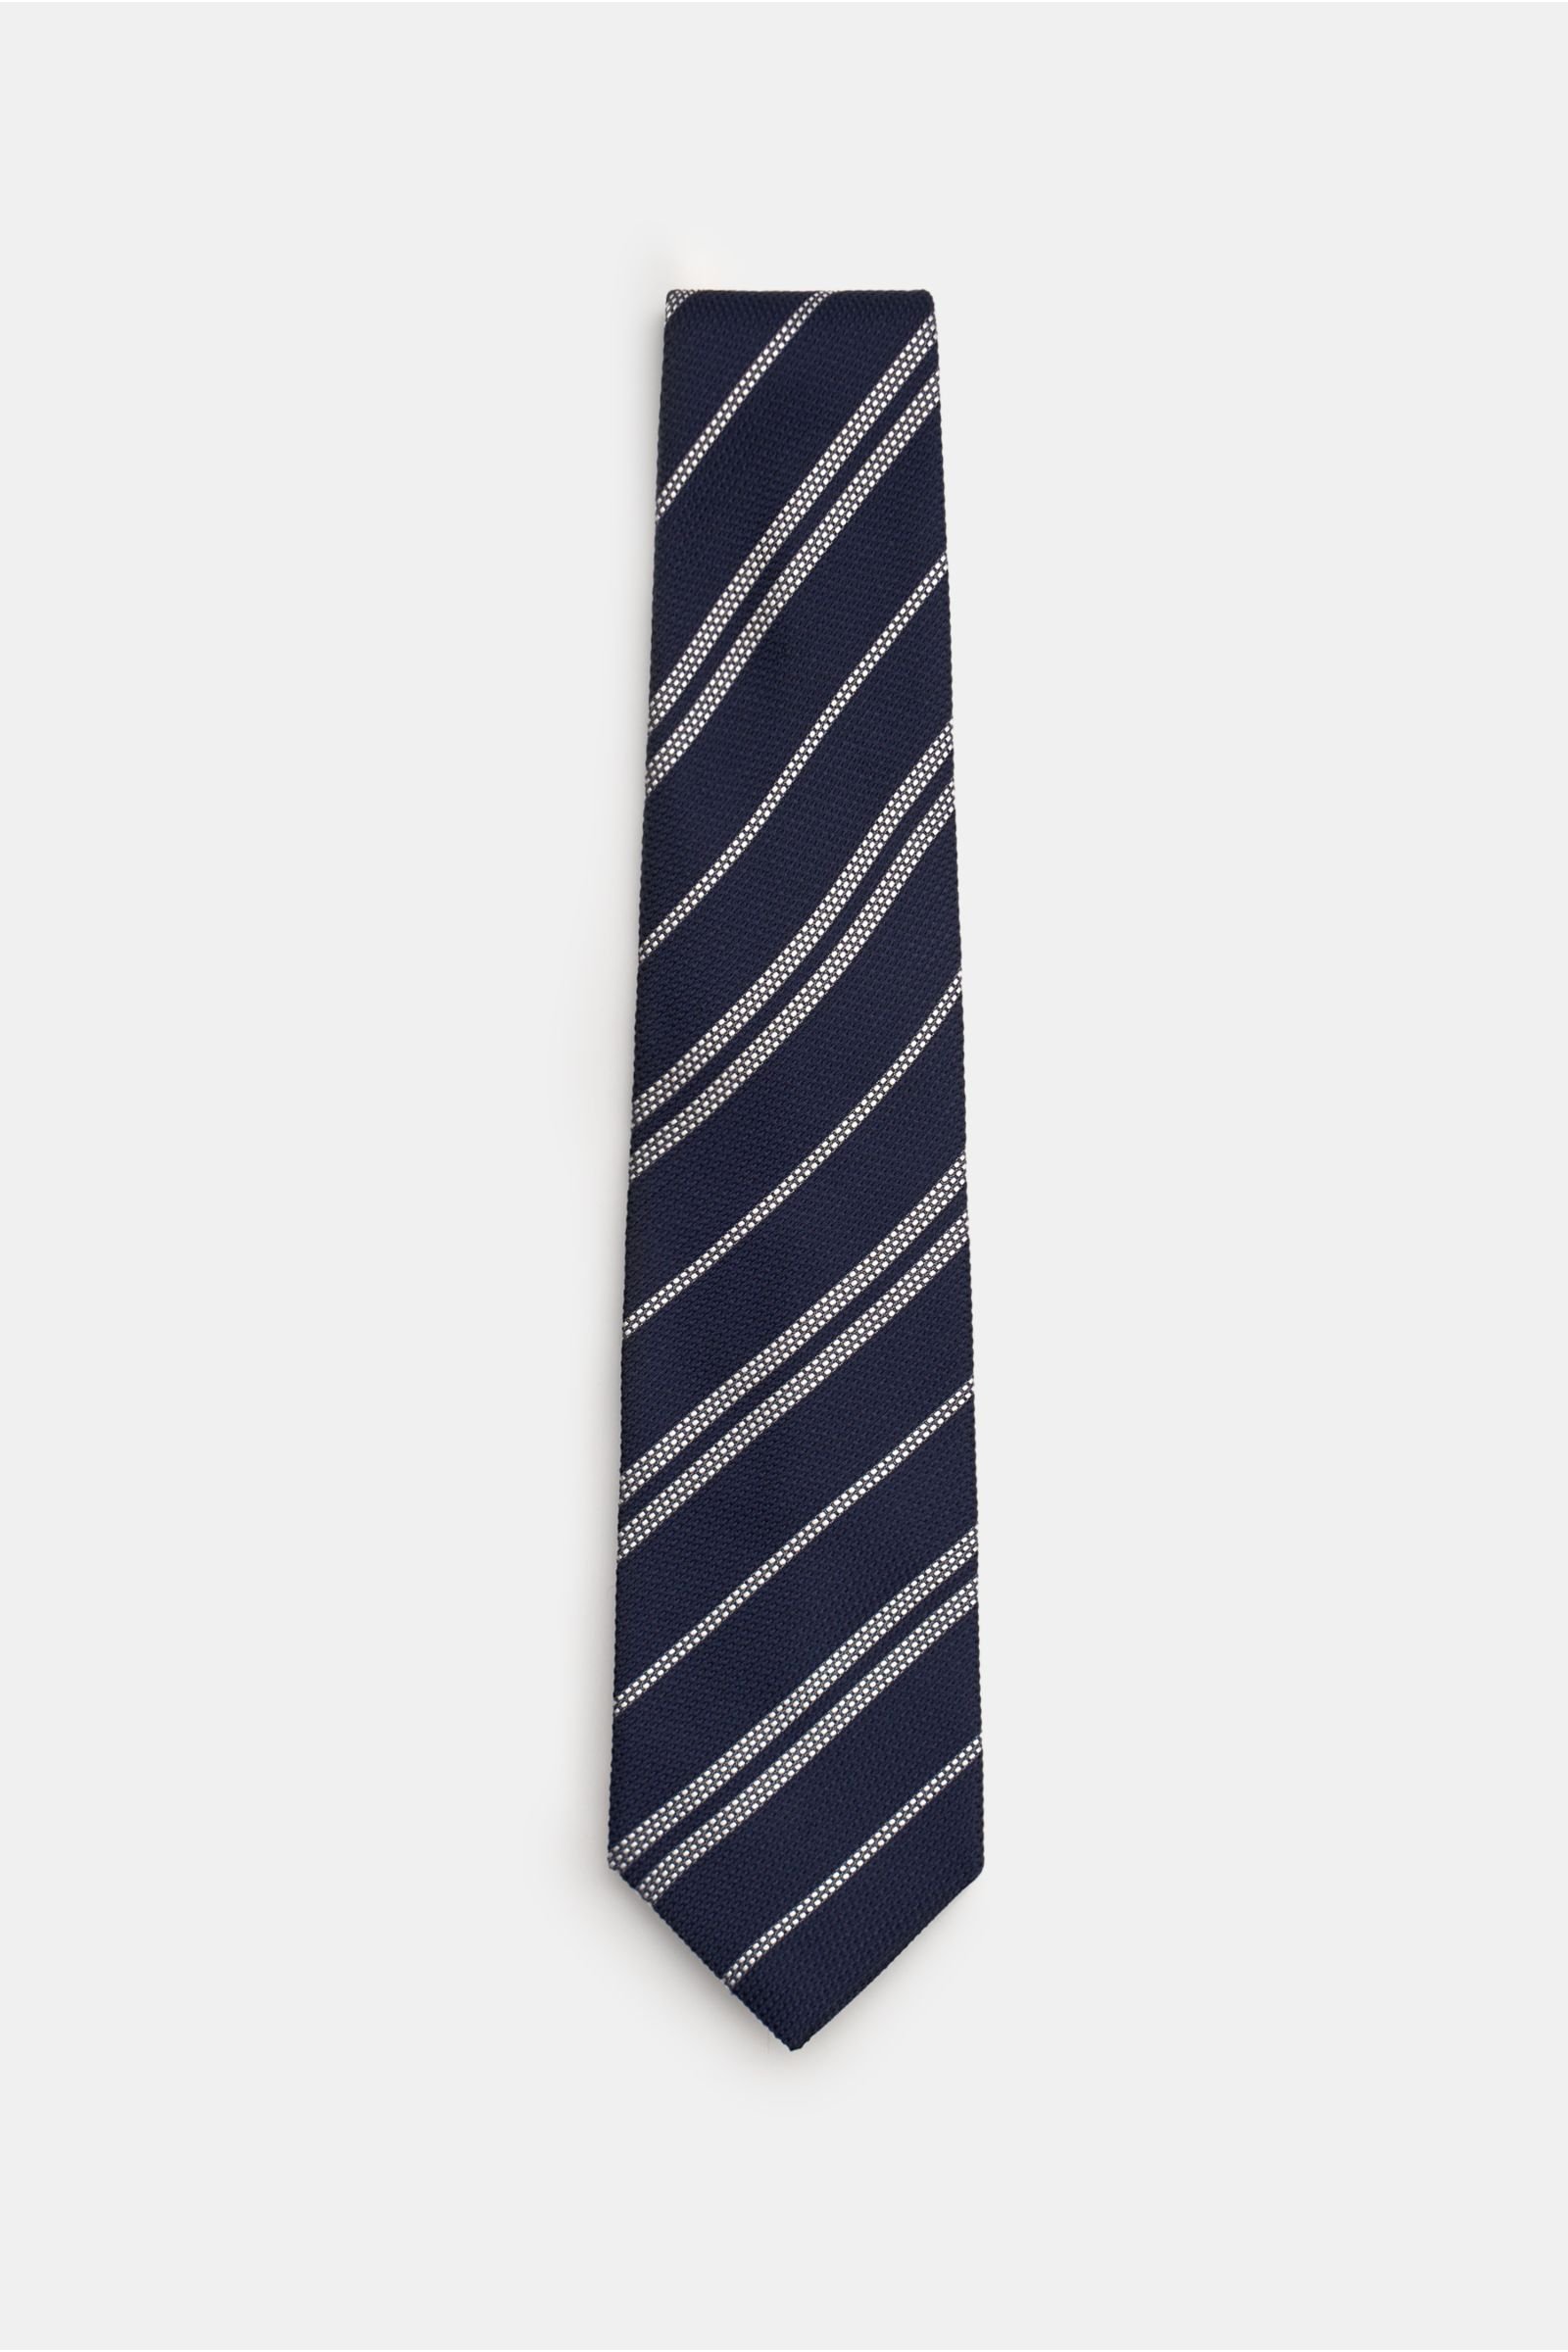 Silk tie navy/silver-grey striped